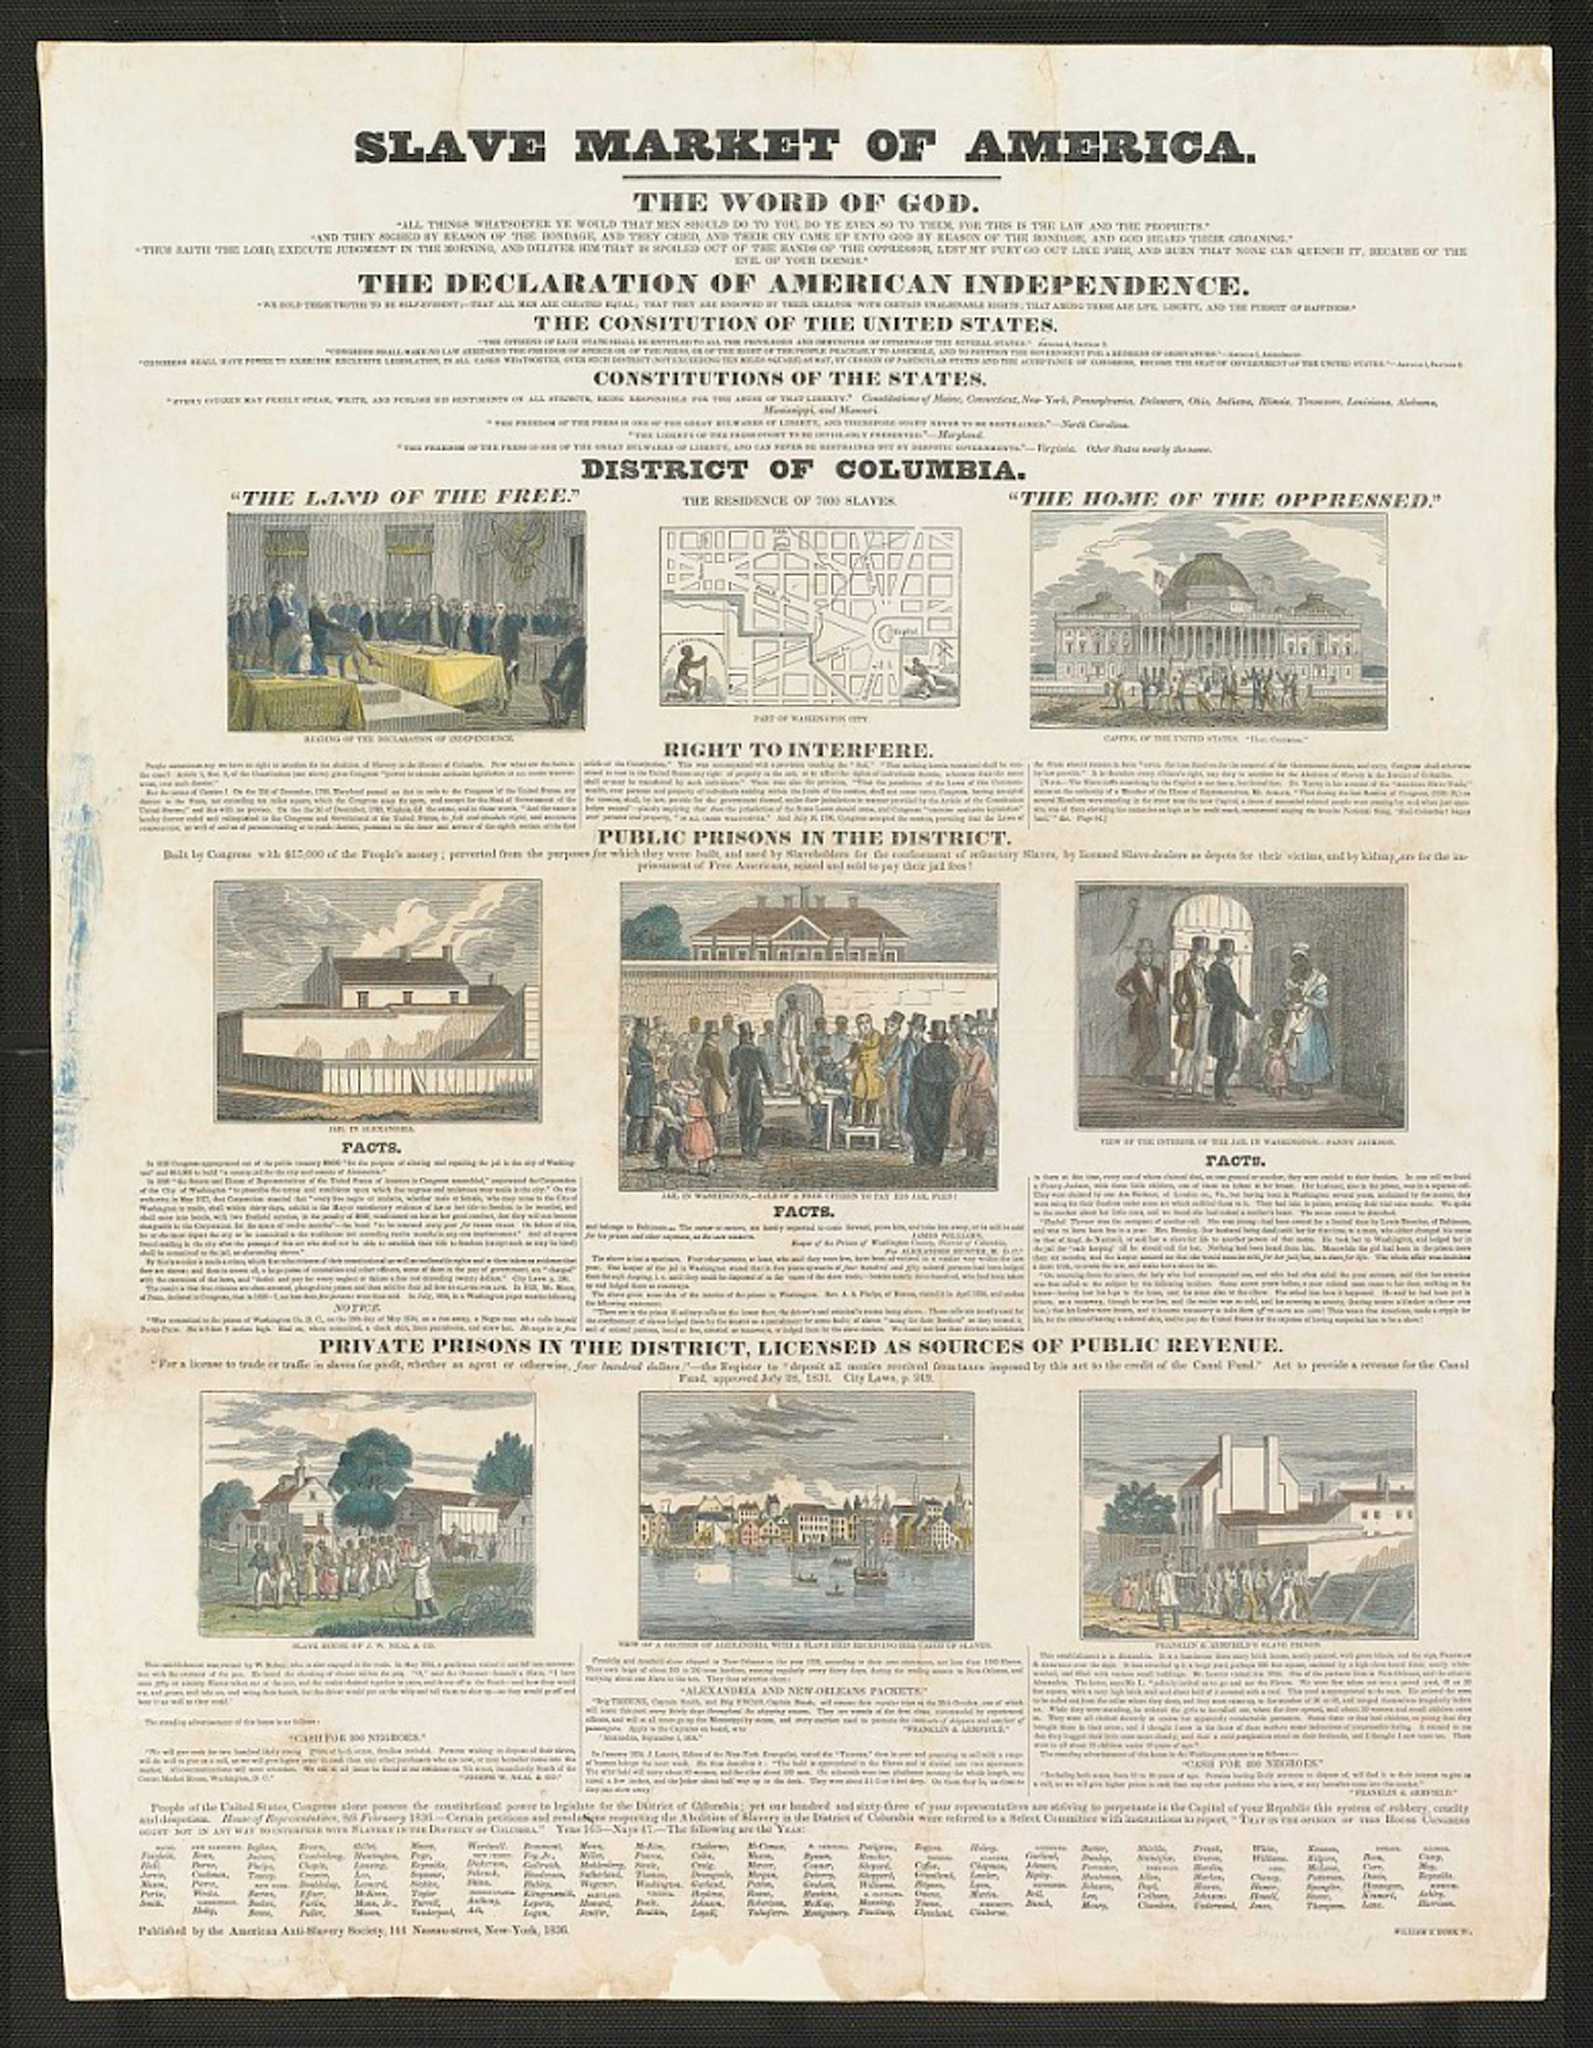 Document image of "slave market of America" broadside